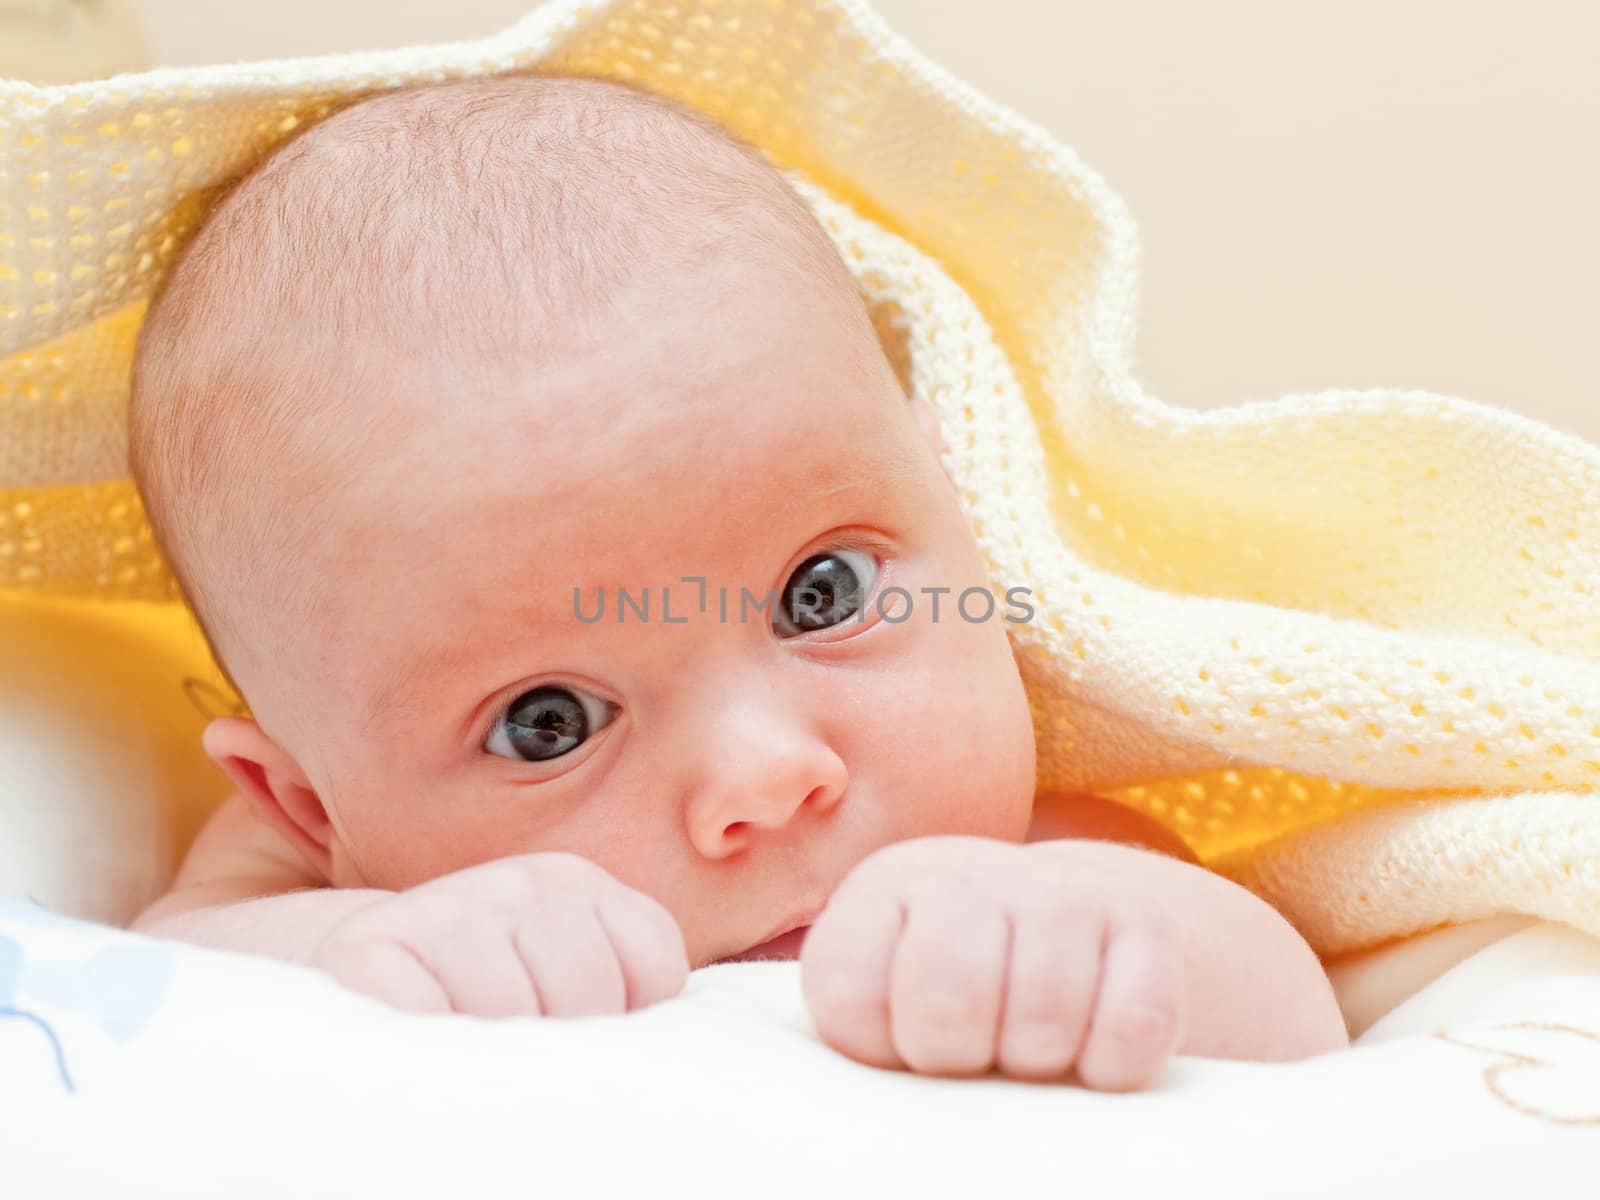 Newborn baby by naumoid